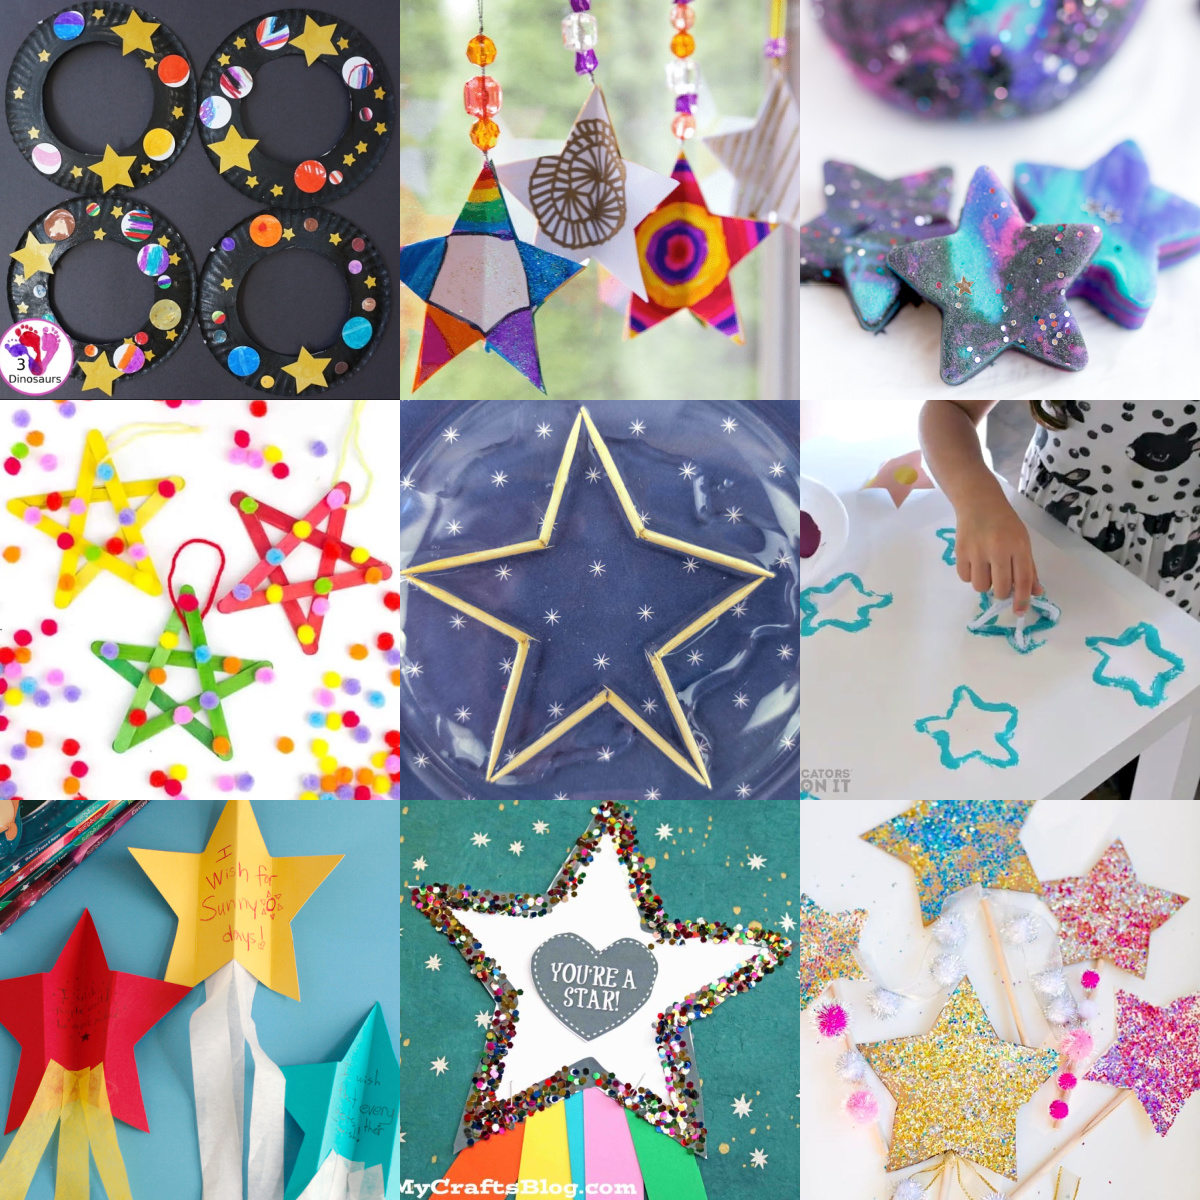 Craft Room Ideas - 10 Inspirational Ideas - Bright Star Kids USA